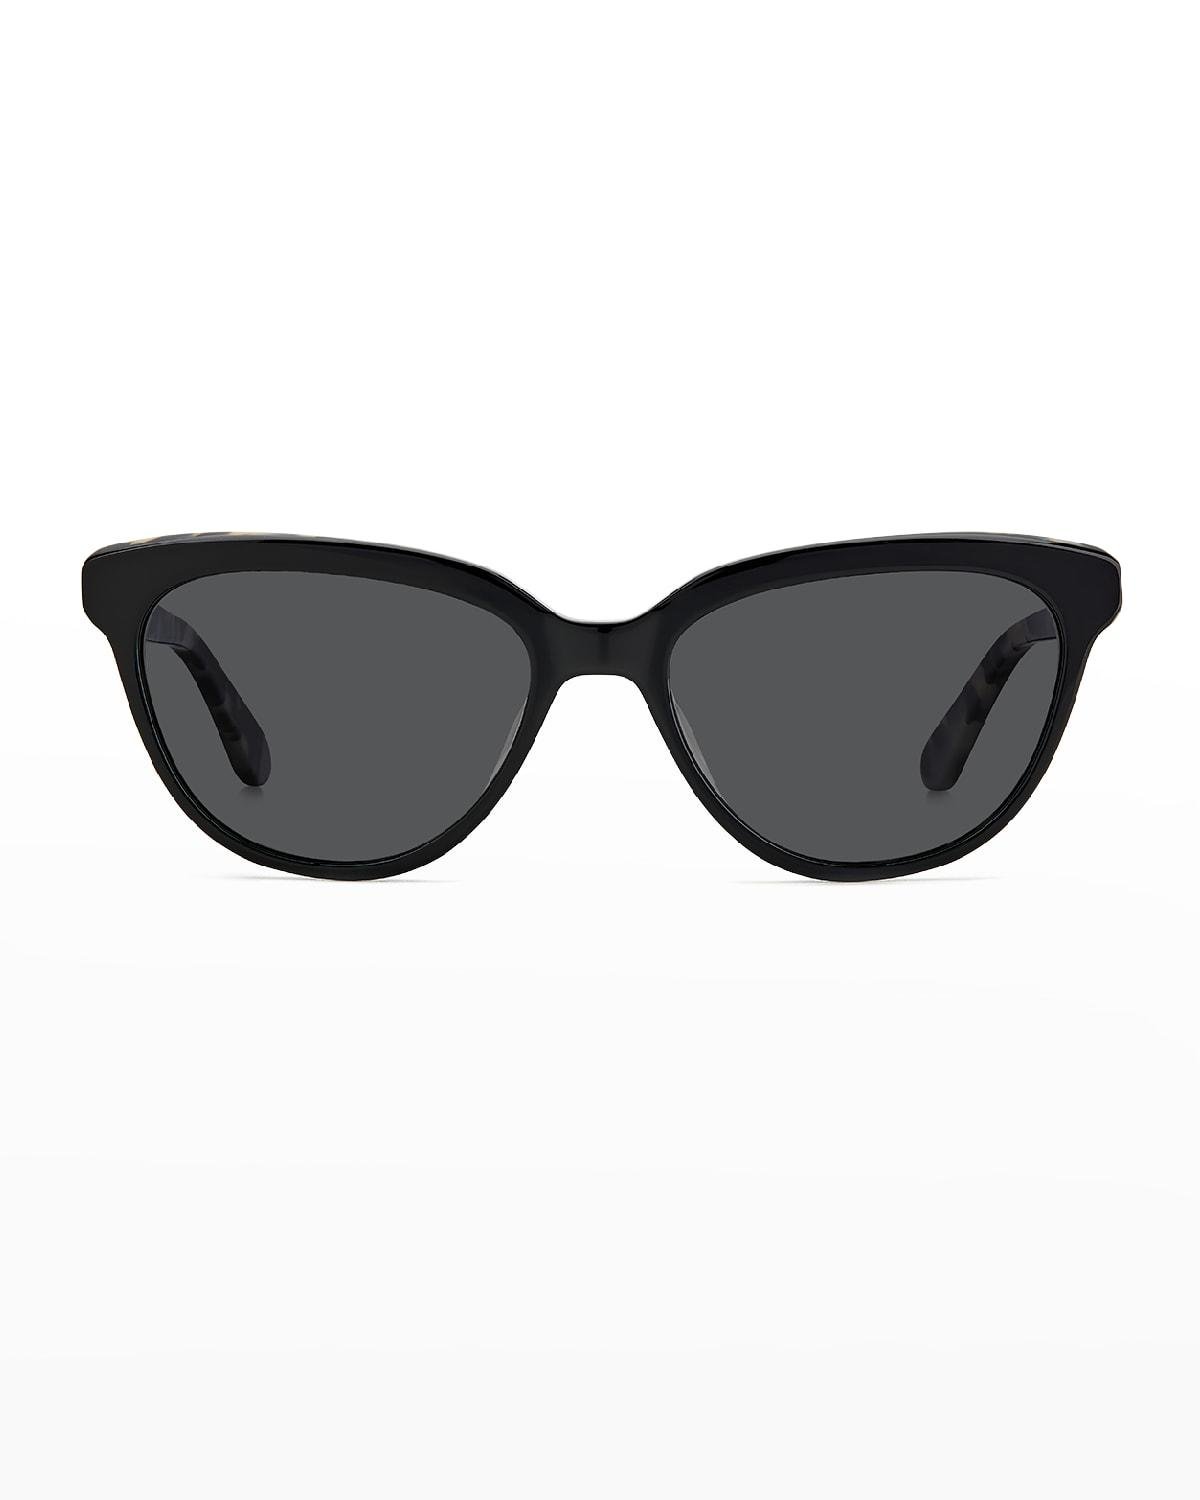 cayennes polarized acetate cat-eye sunglasses by KATE SPADE NEW YORK